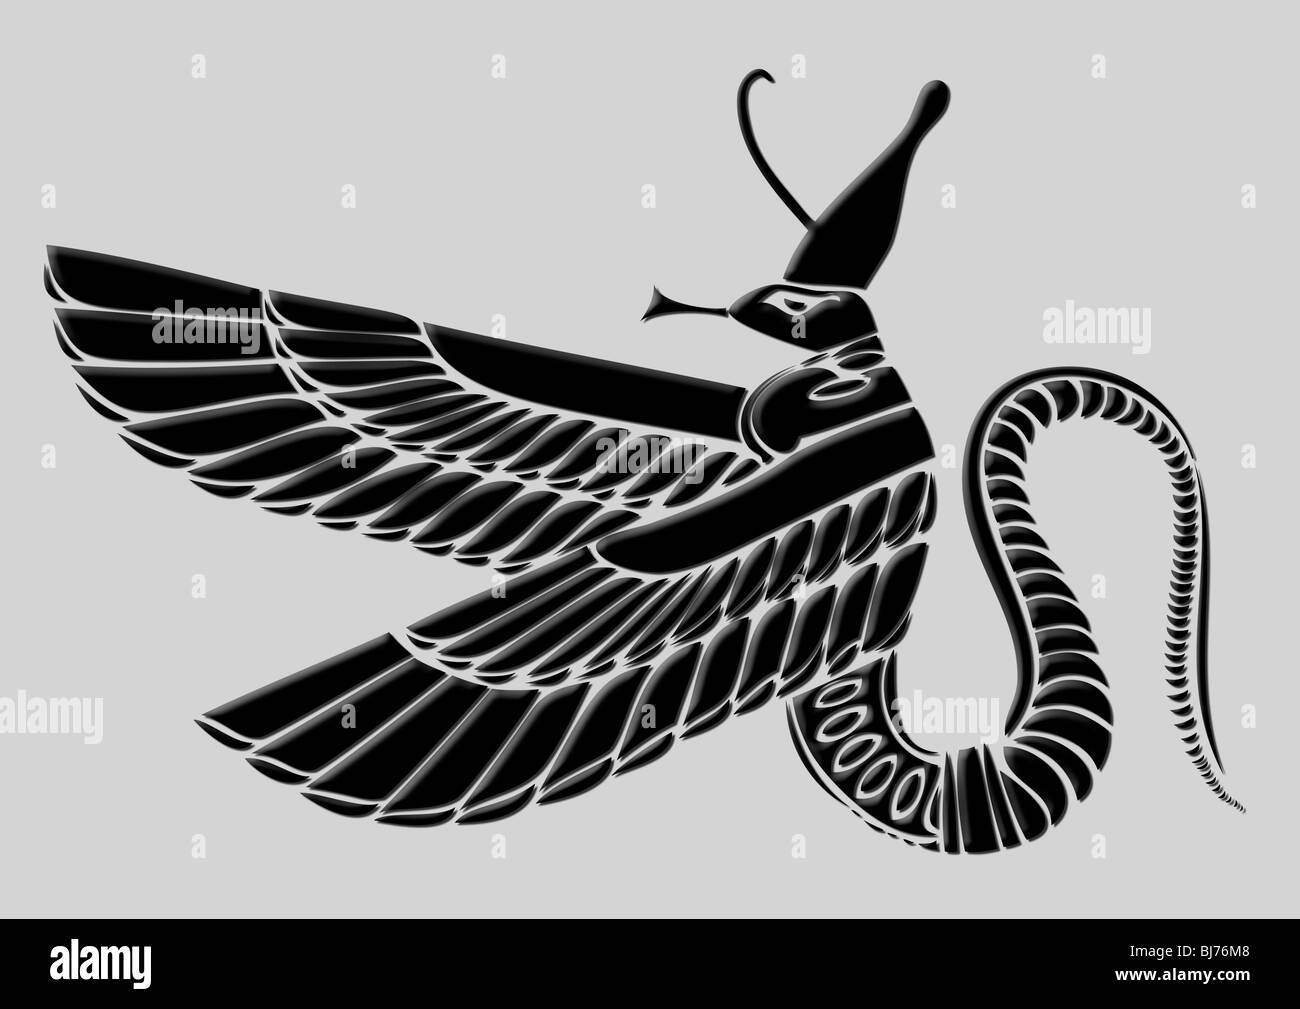 Egyptian demon - creature from mythology of ancient Egypt Stock Photo